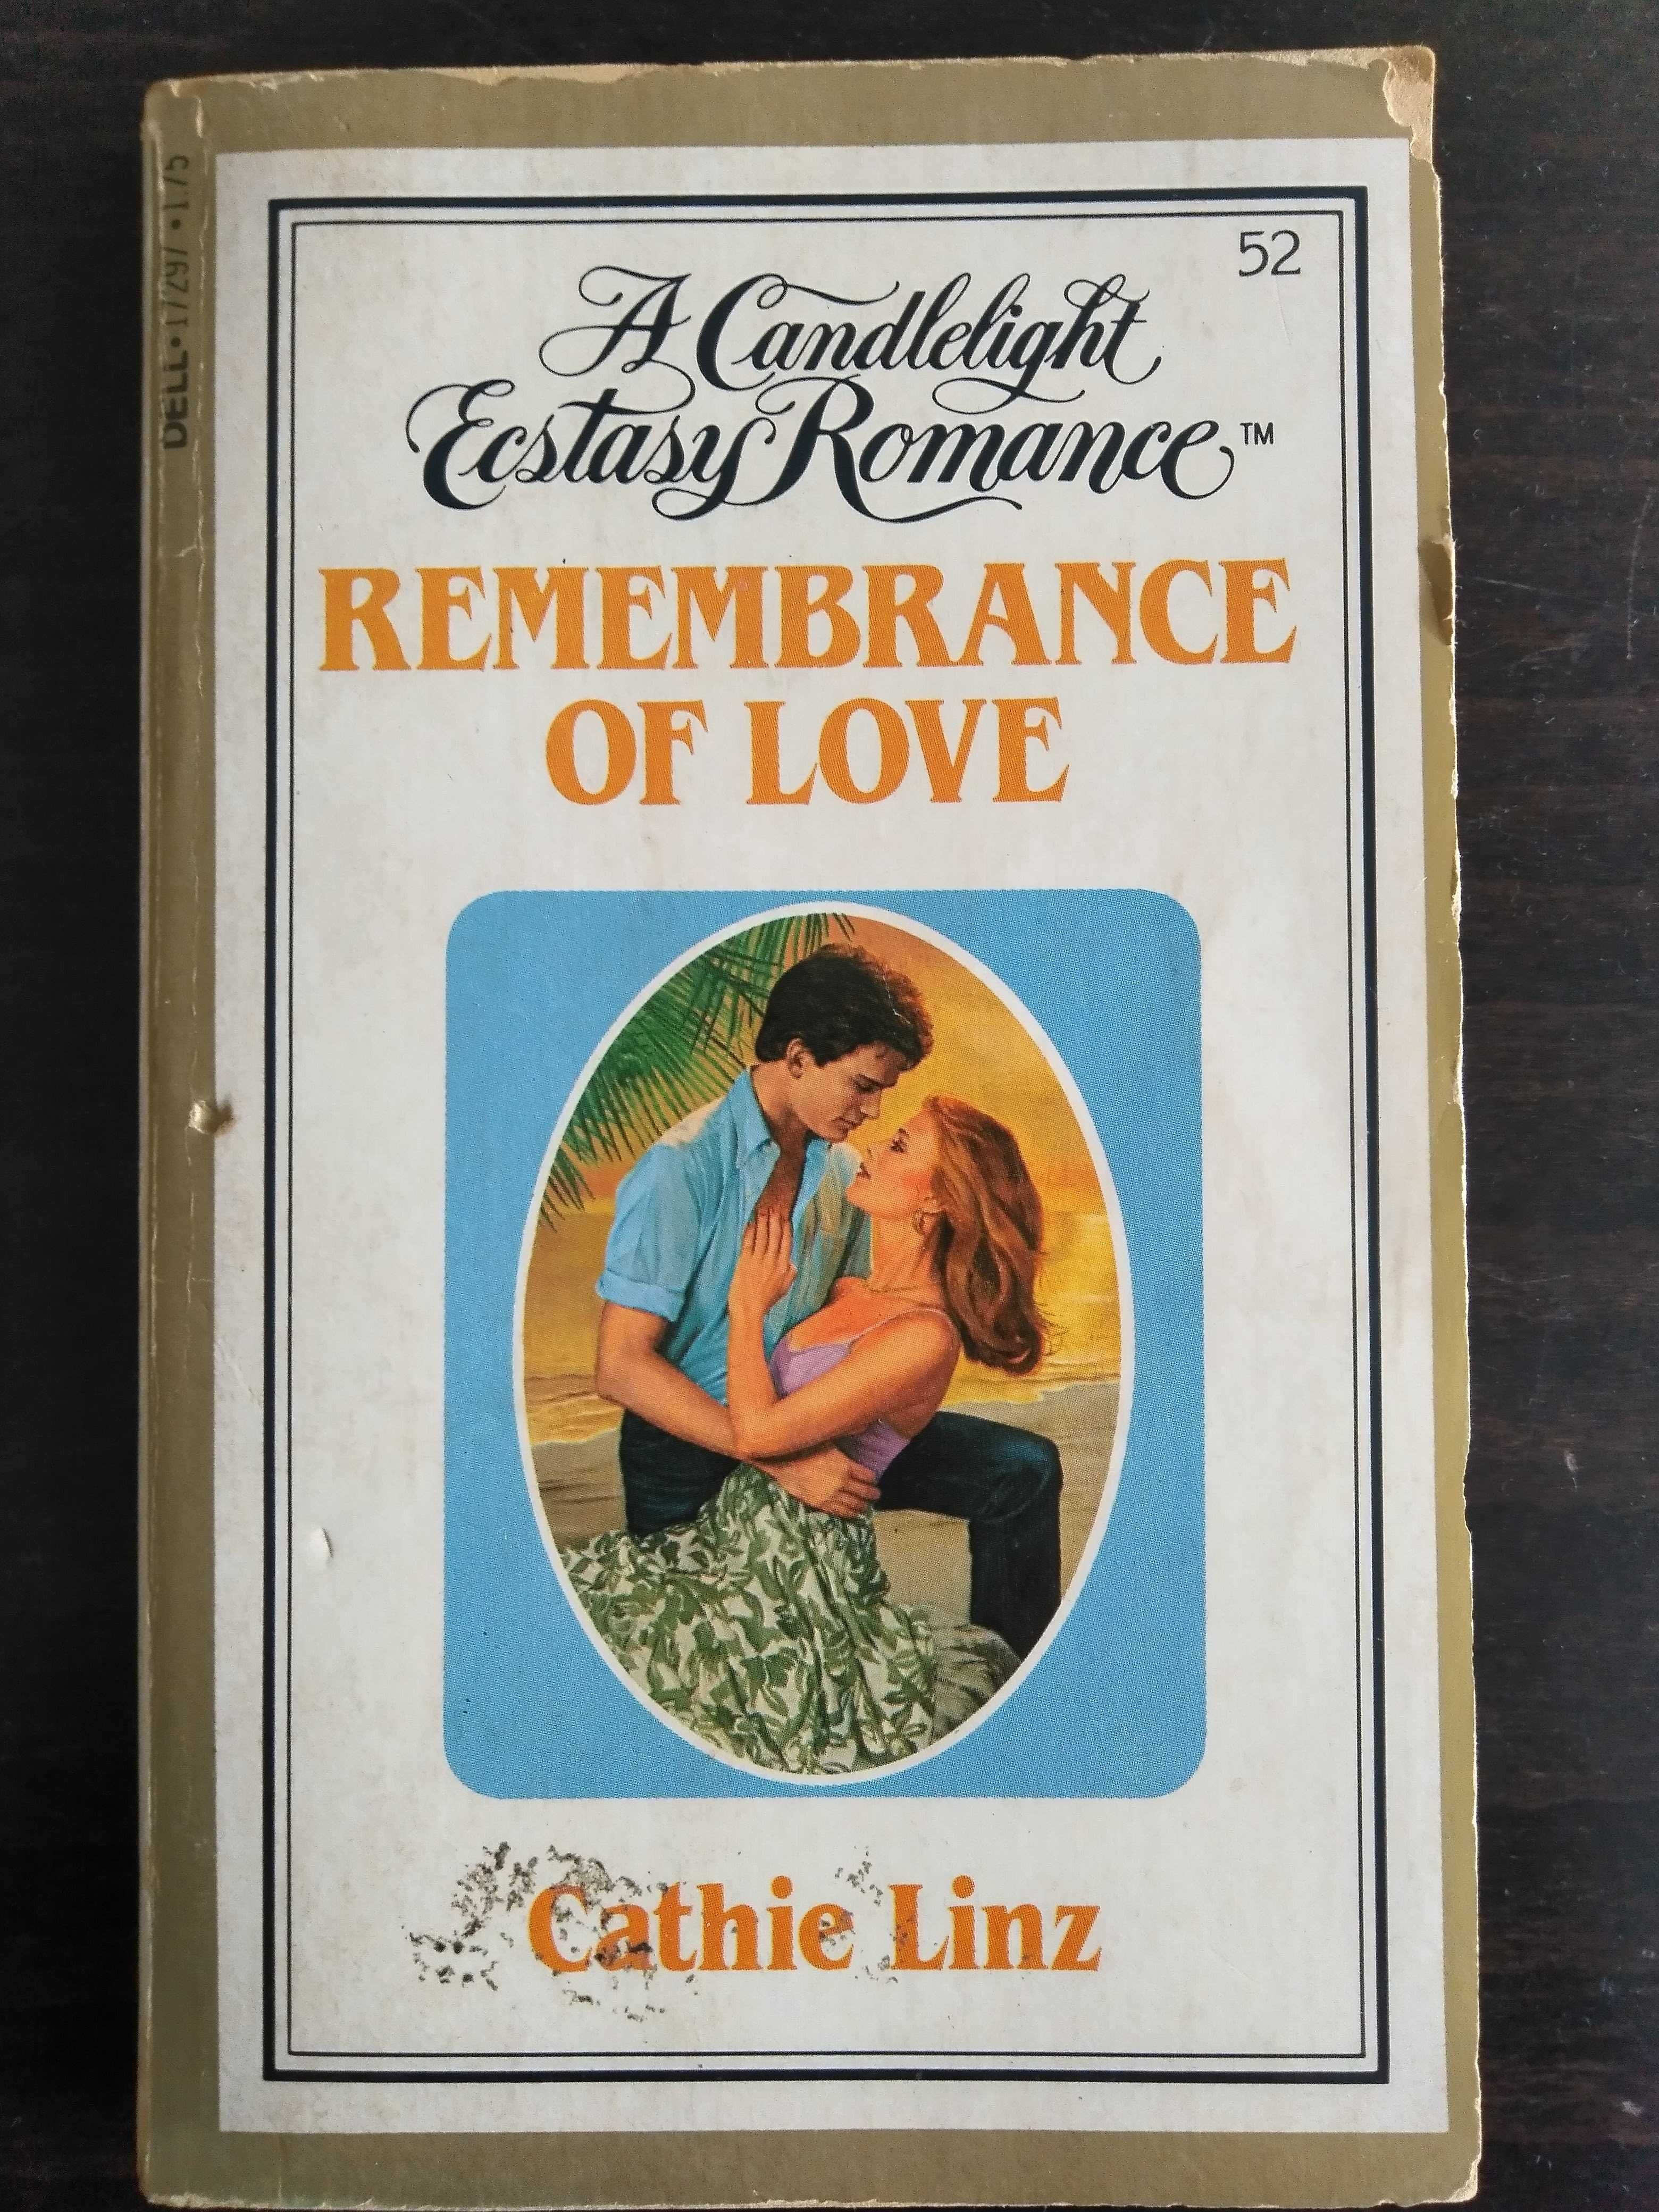 livro: Cathie Linz "Remembrance of love"